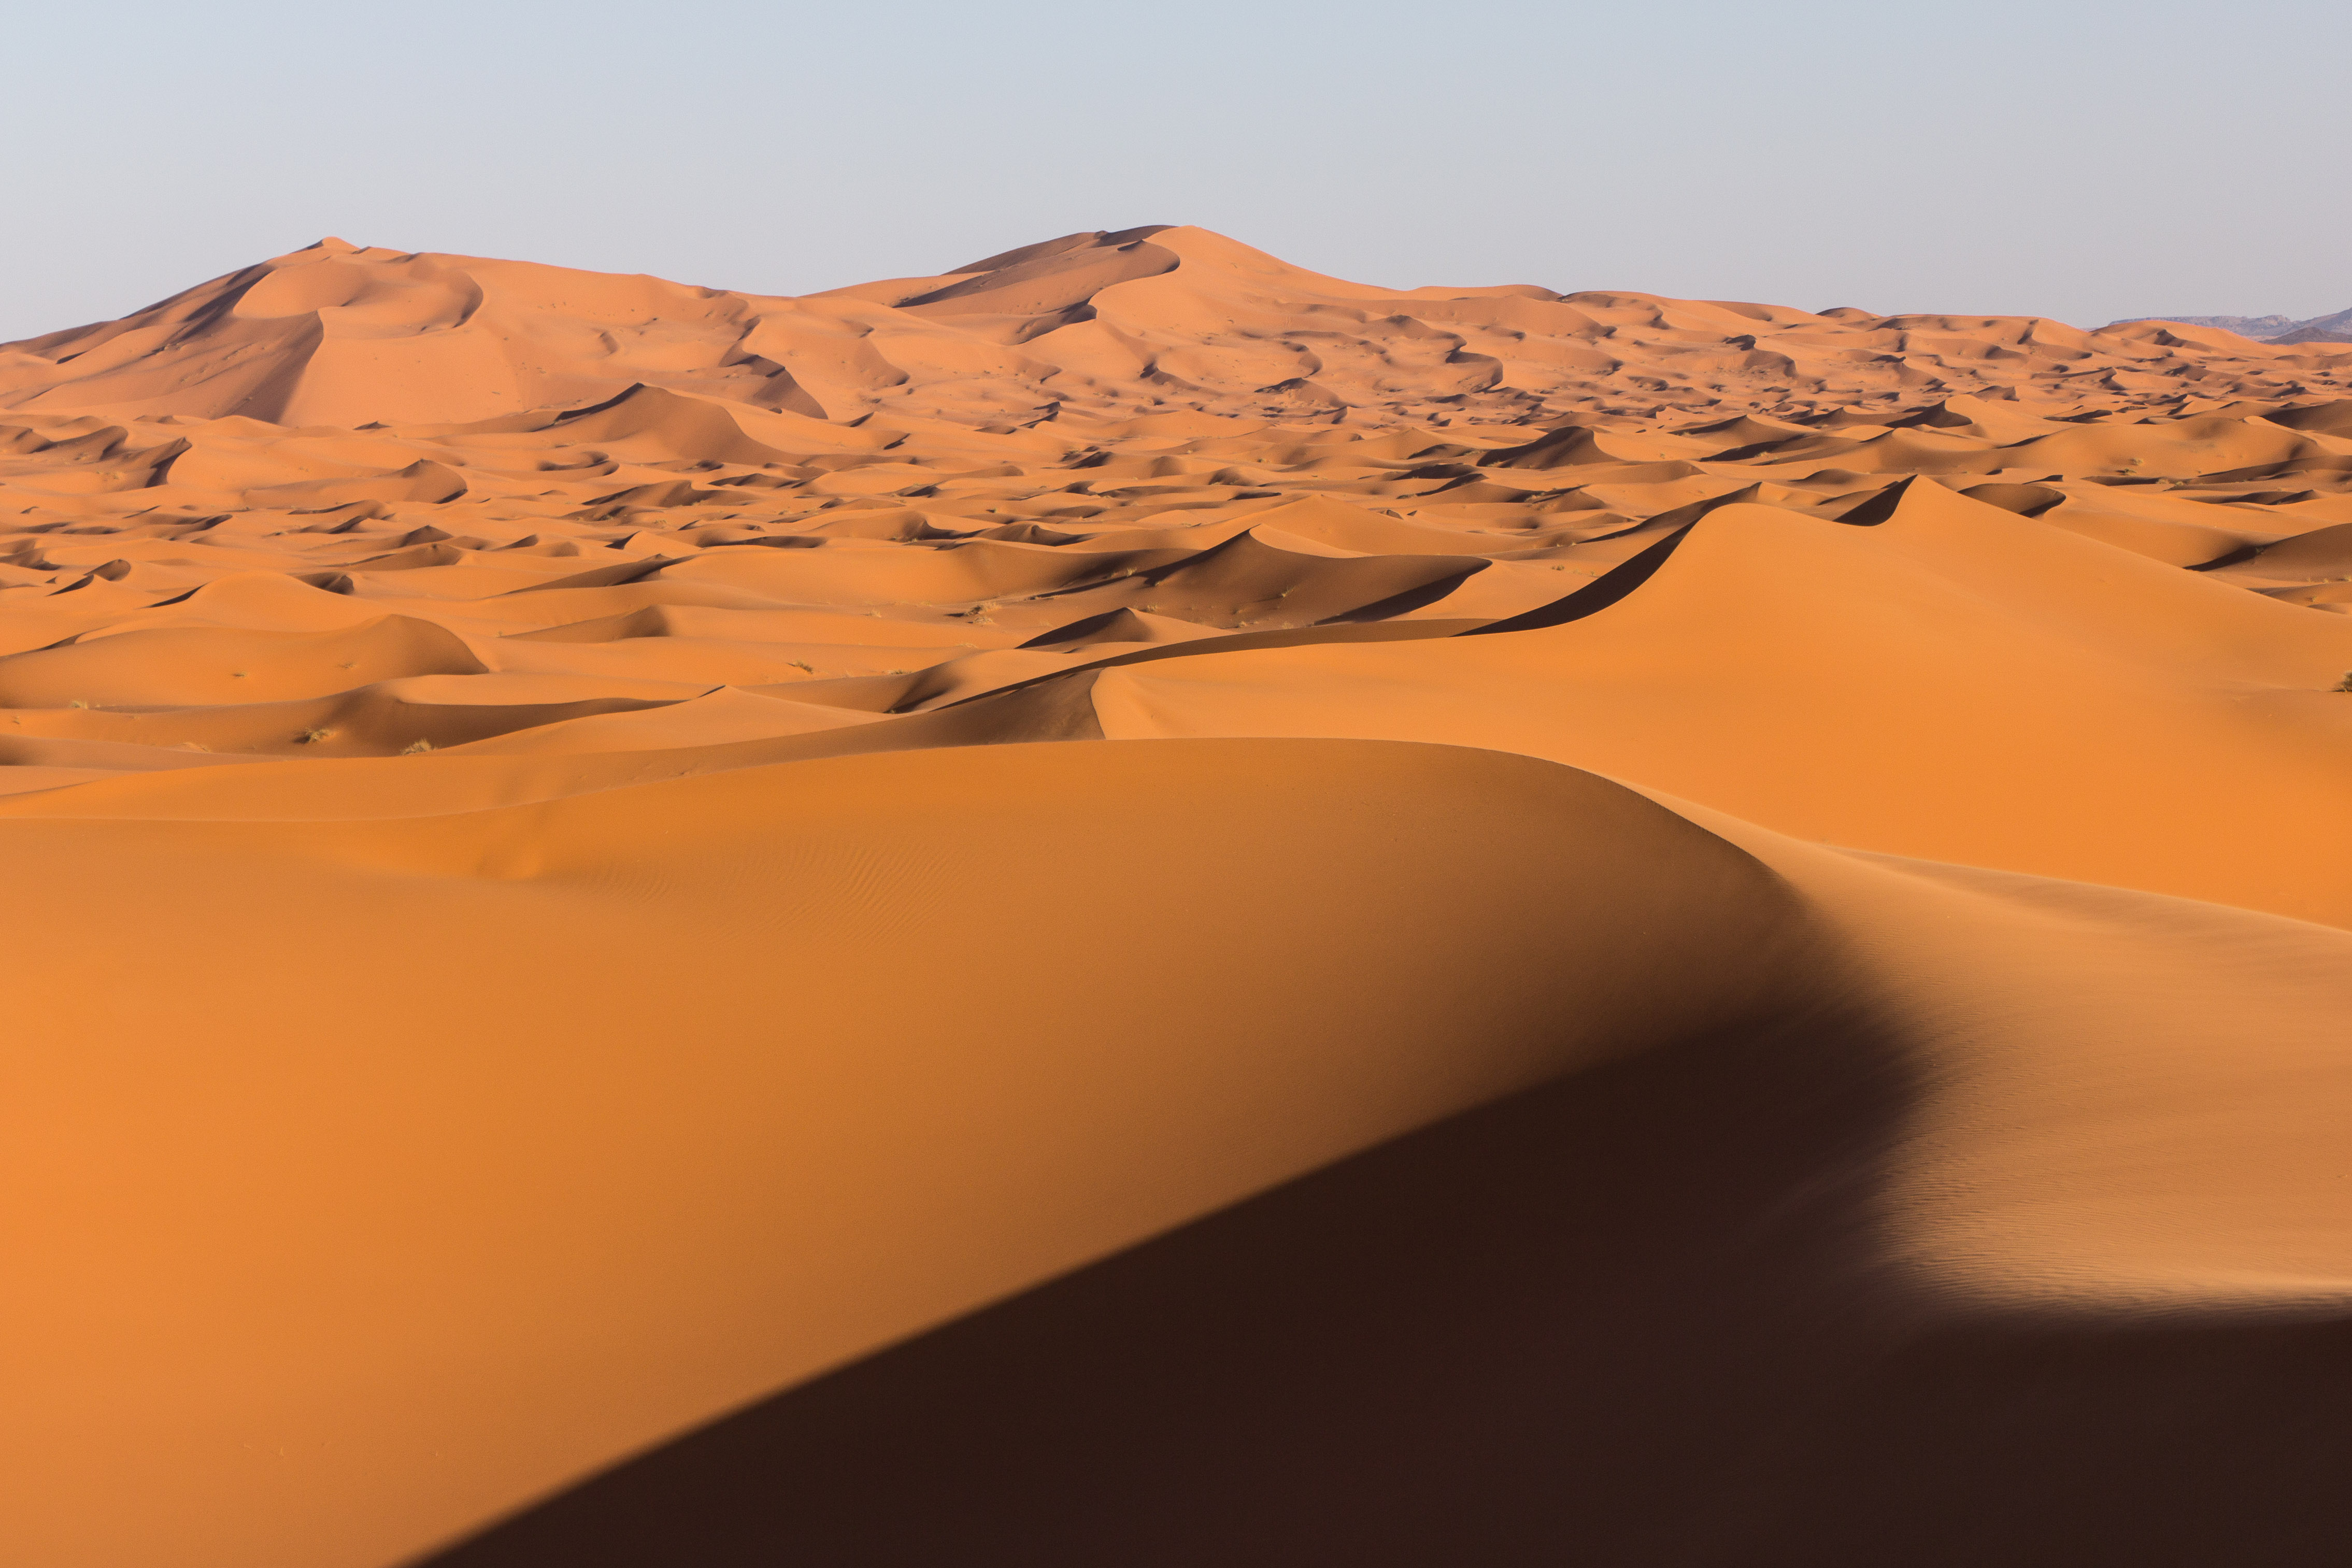 03 days Morocco desert tour to Erg Chebbi dunes from Marrakech